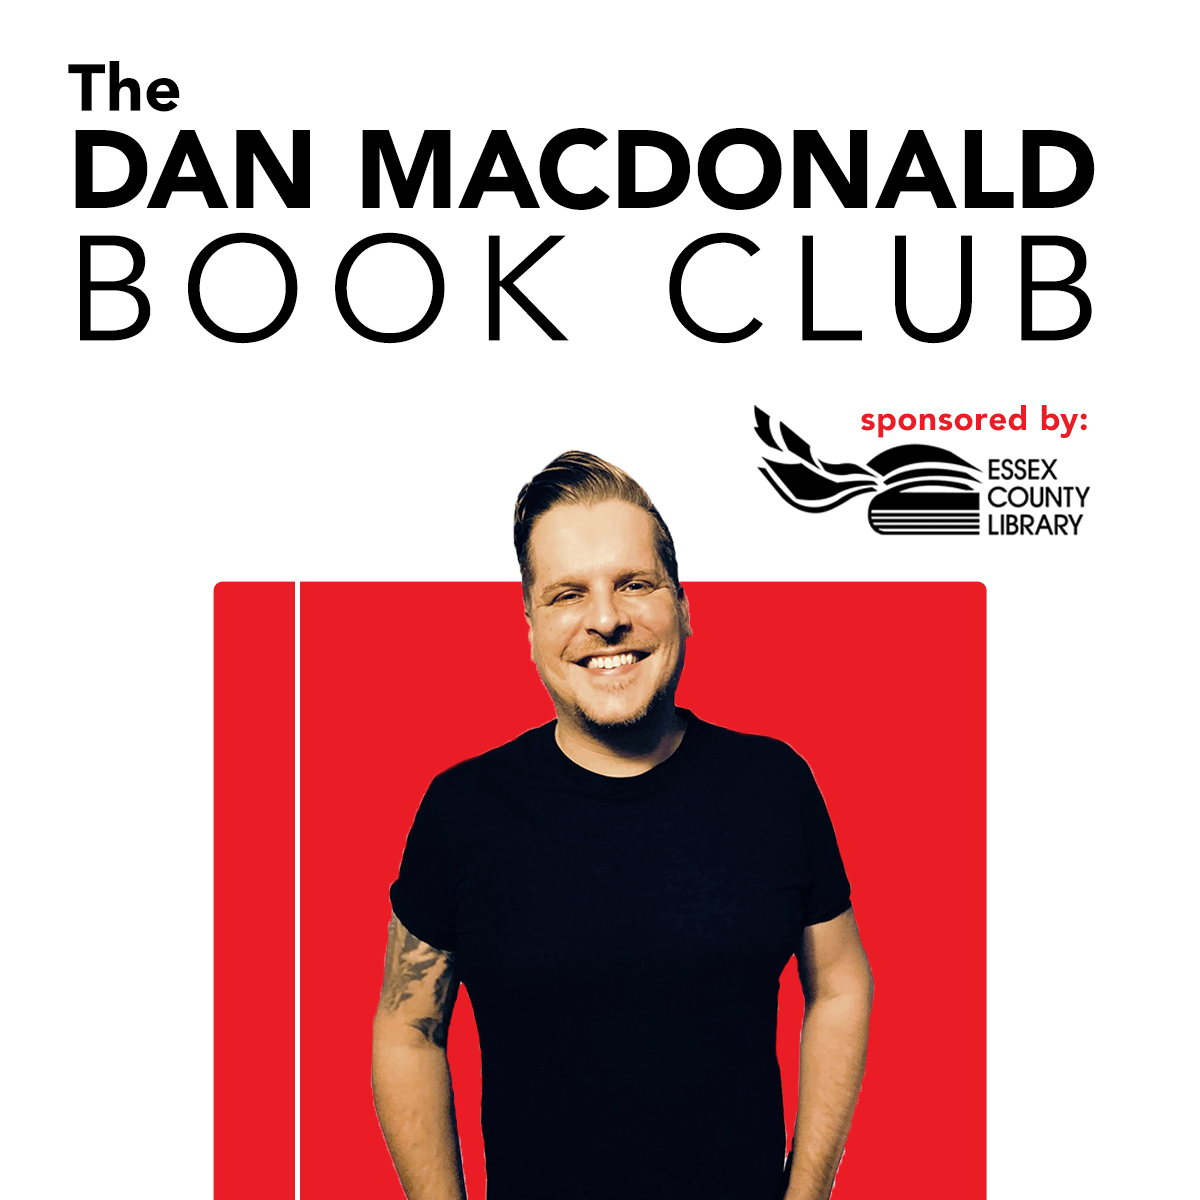 Dan MacDonald Book Club - Moon of the Crusted Snow